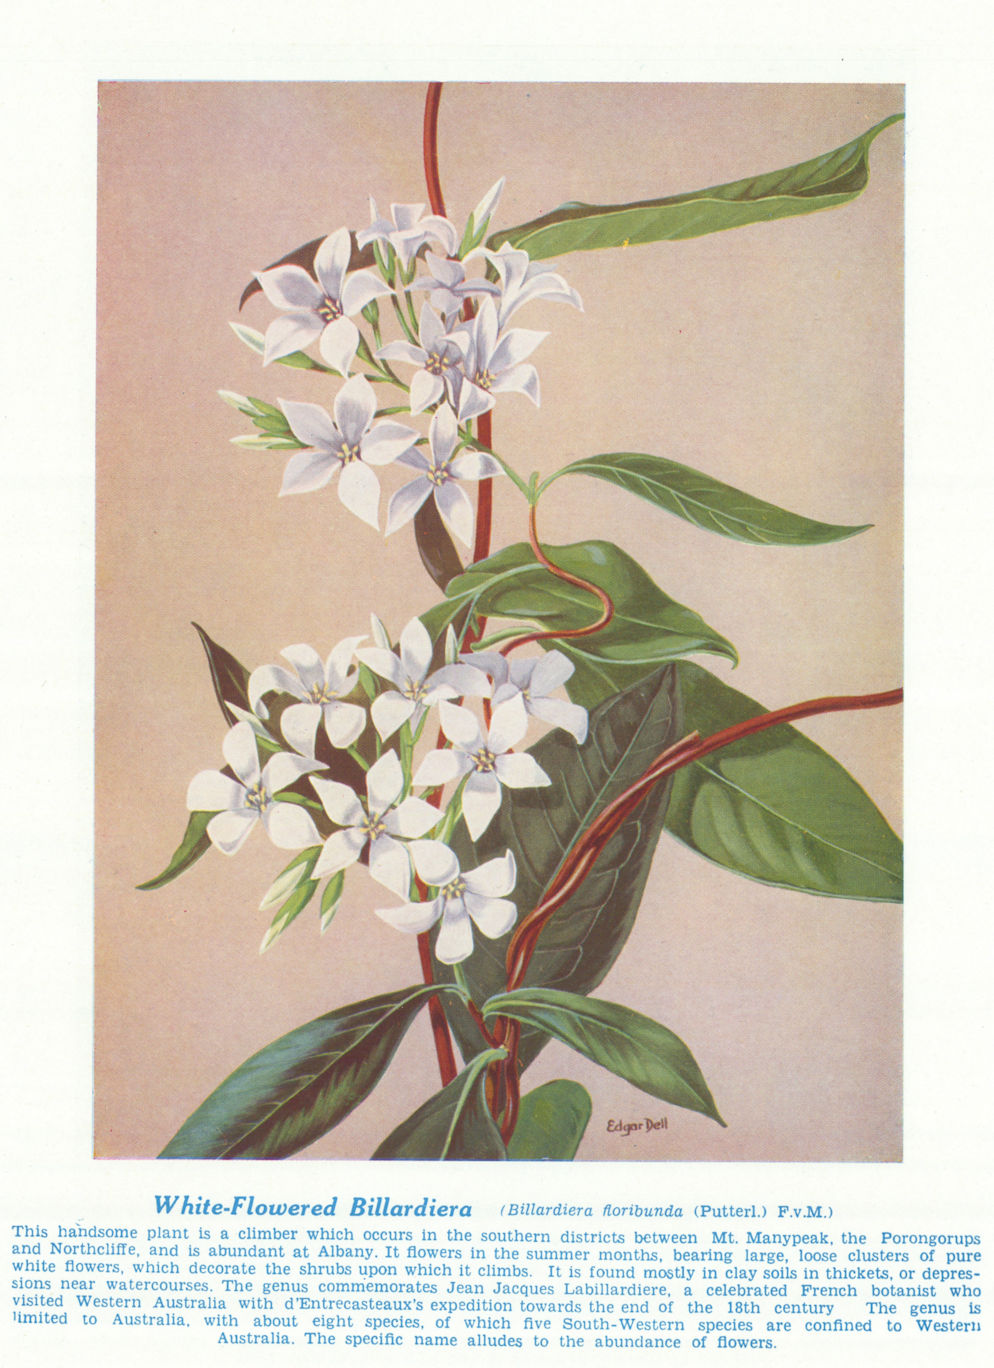 White-flowered Billiardiera (Billardiera floribunda) Australian Wild Flower 1950